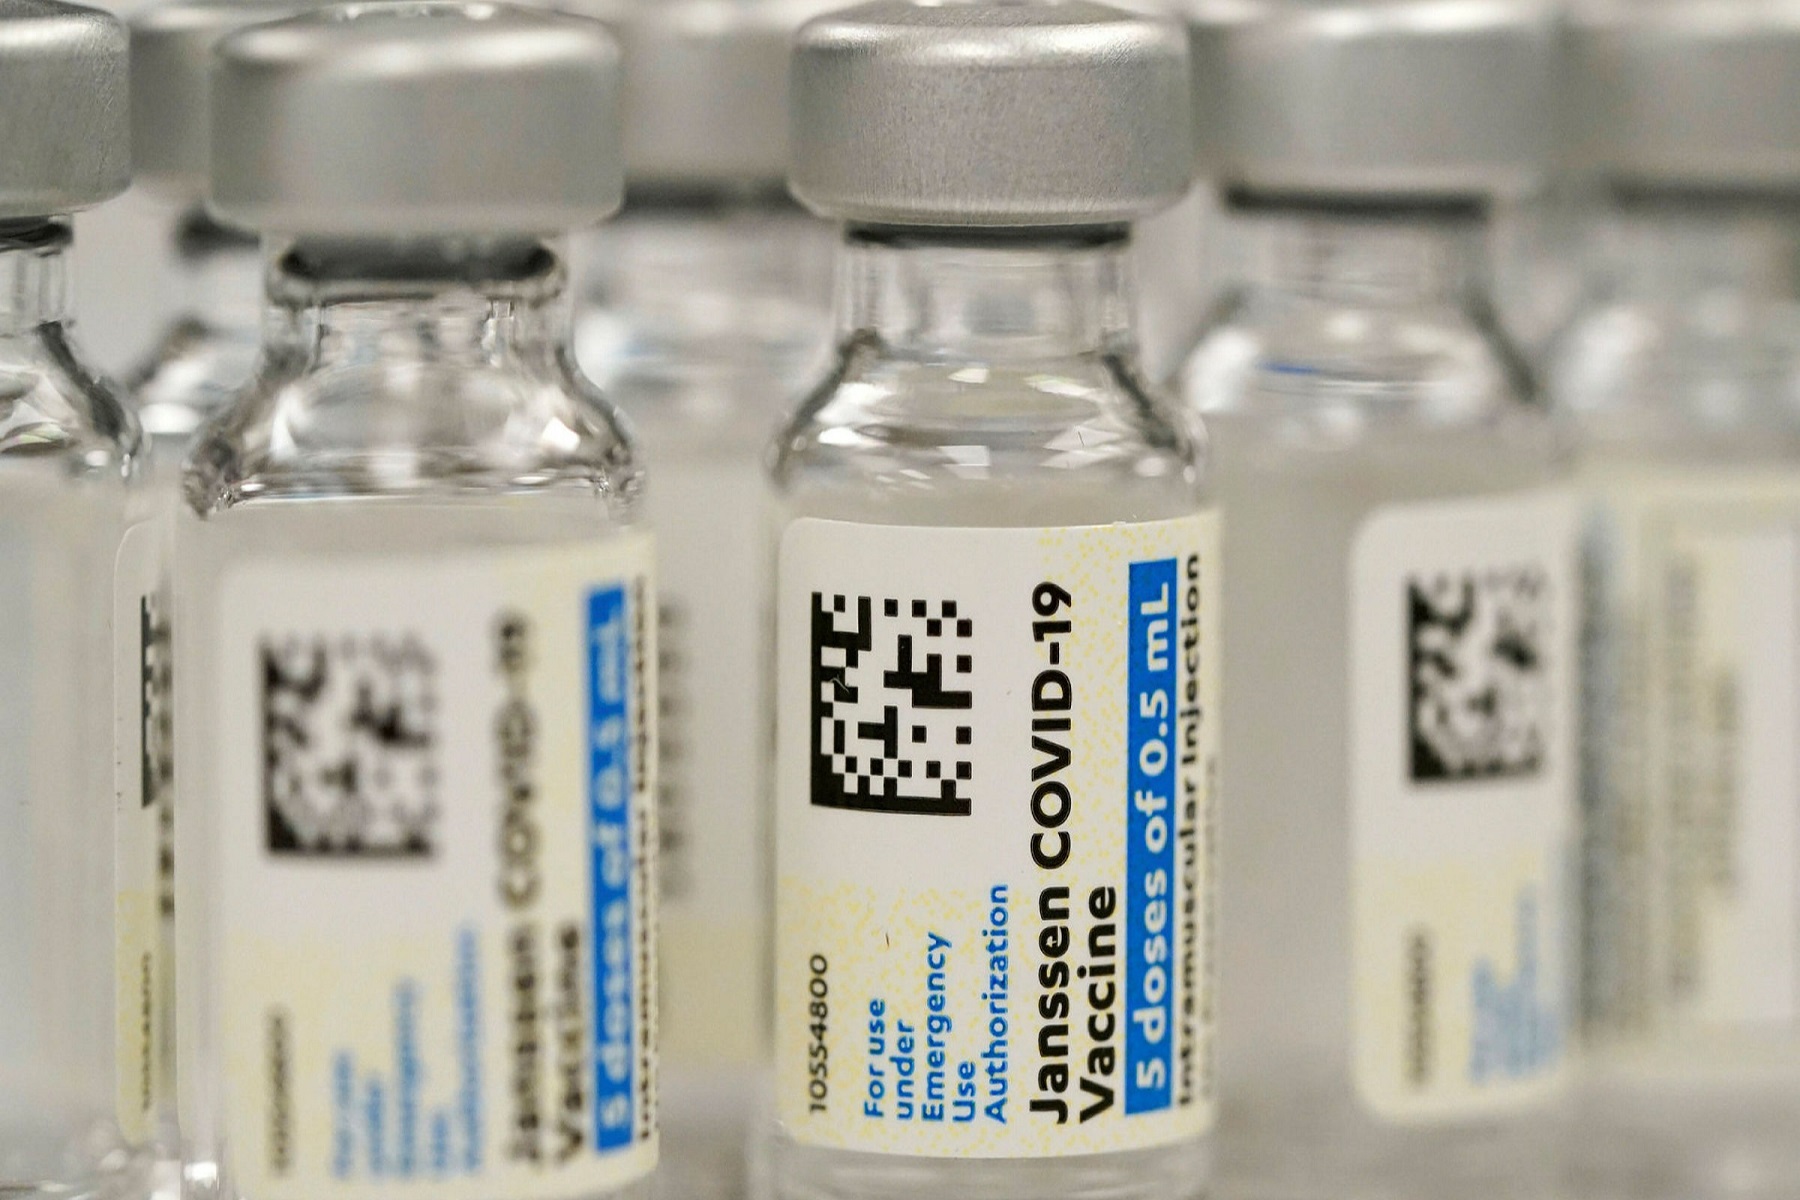 Covid ΗΠΑ: Το σχέδιο ενισχυτικού εμβολίου αφήνει ορισμένους ειδικούς διχασμένους